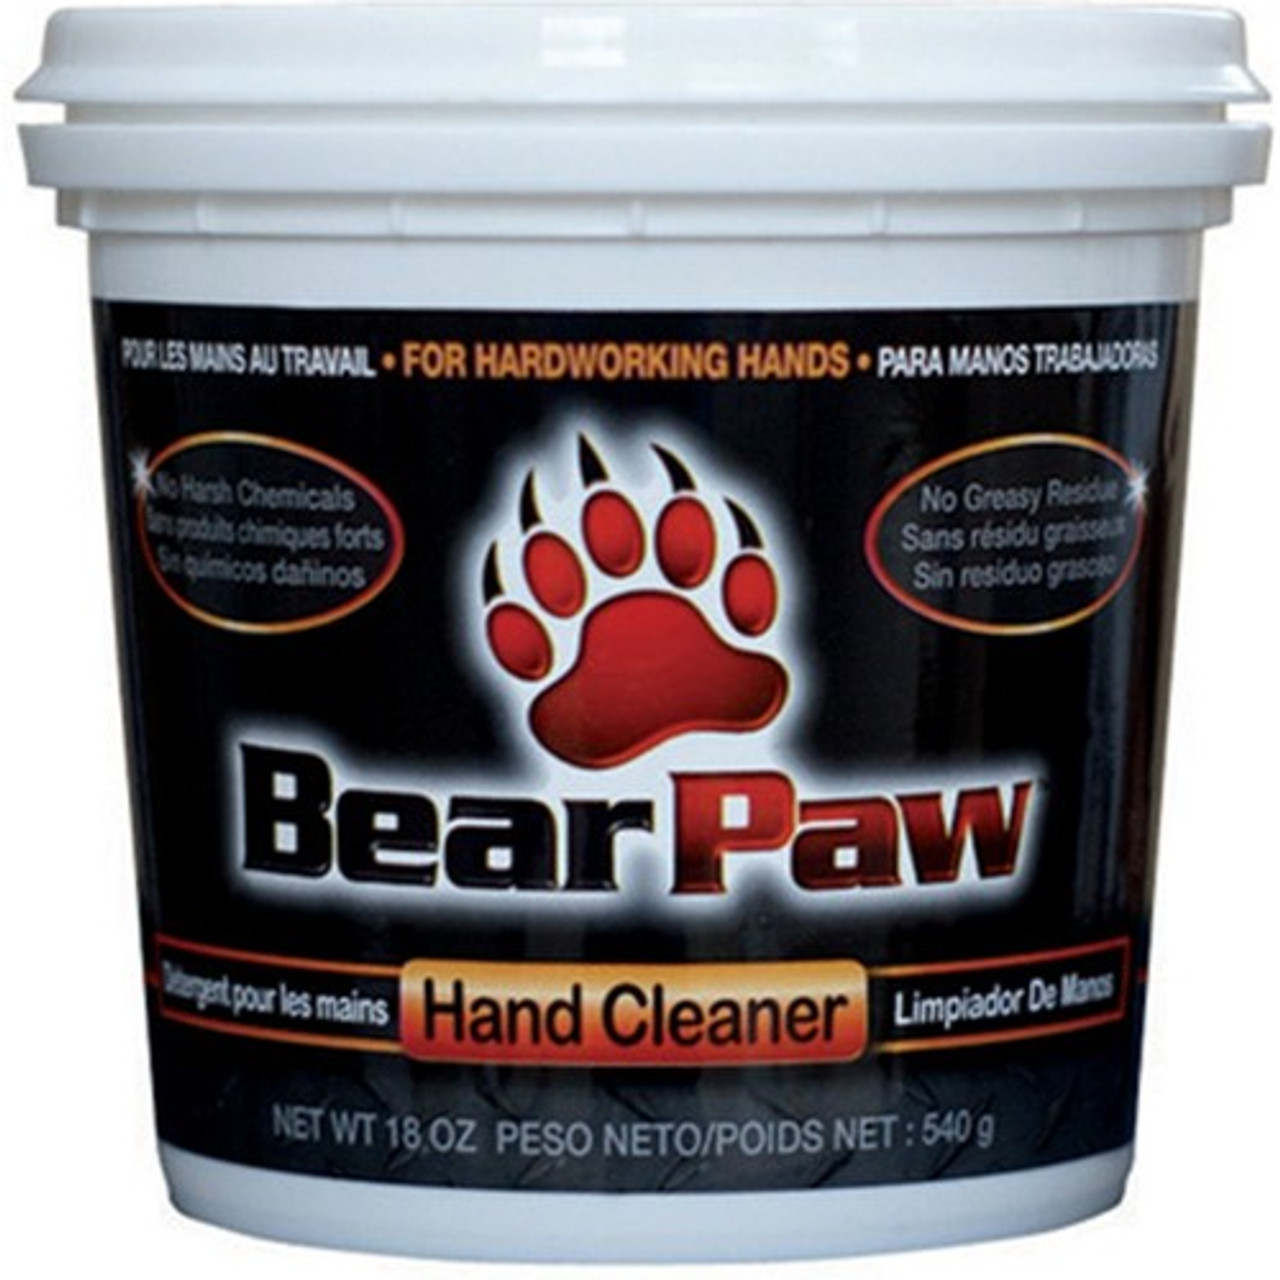 Bear Paw BEPBP632: 18 oz. Tub Hand Cleaner